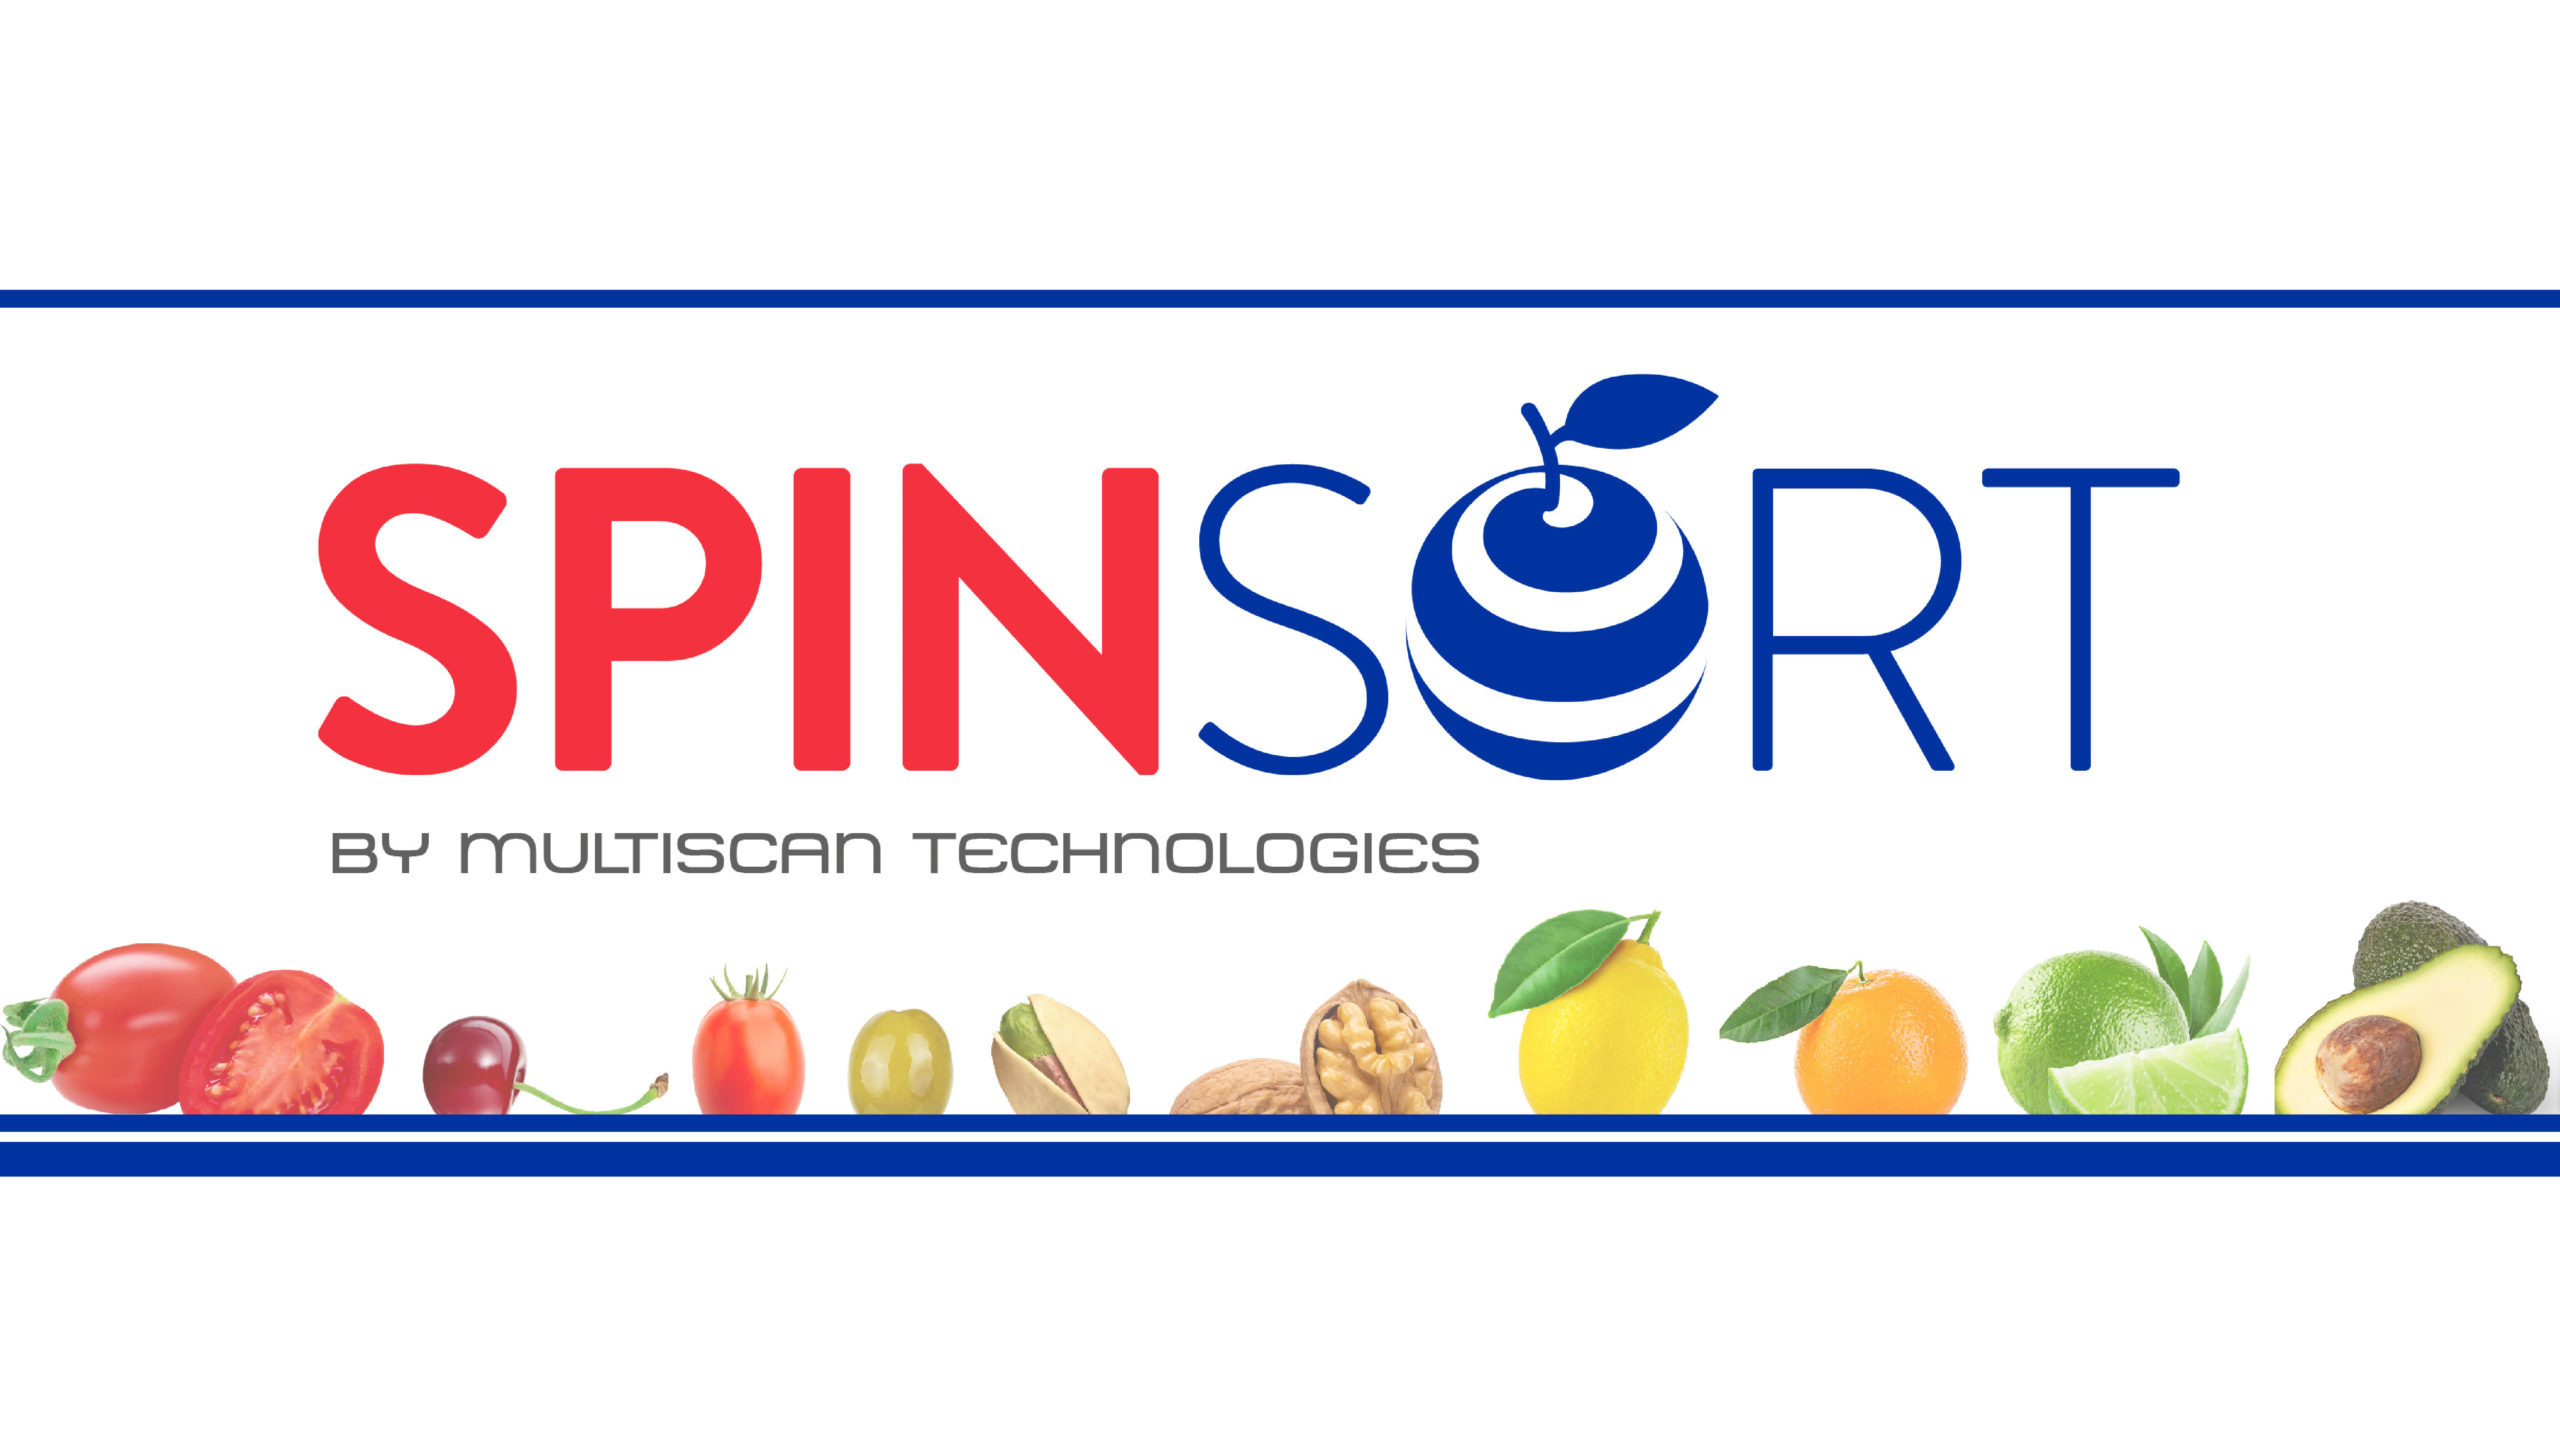 Tecnología SpinSort by Multiscan Technologies